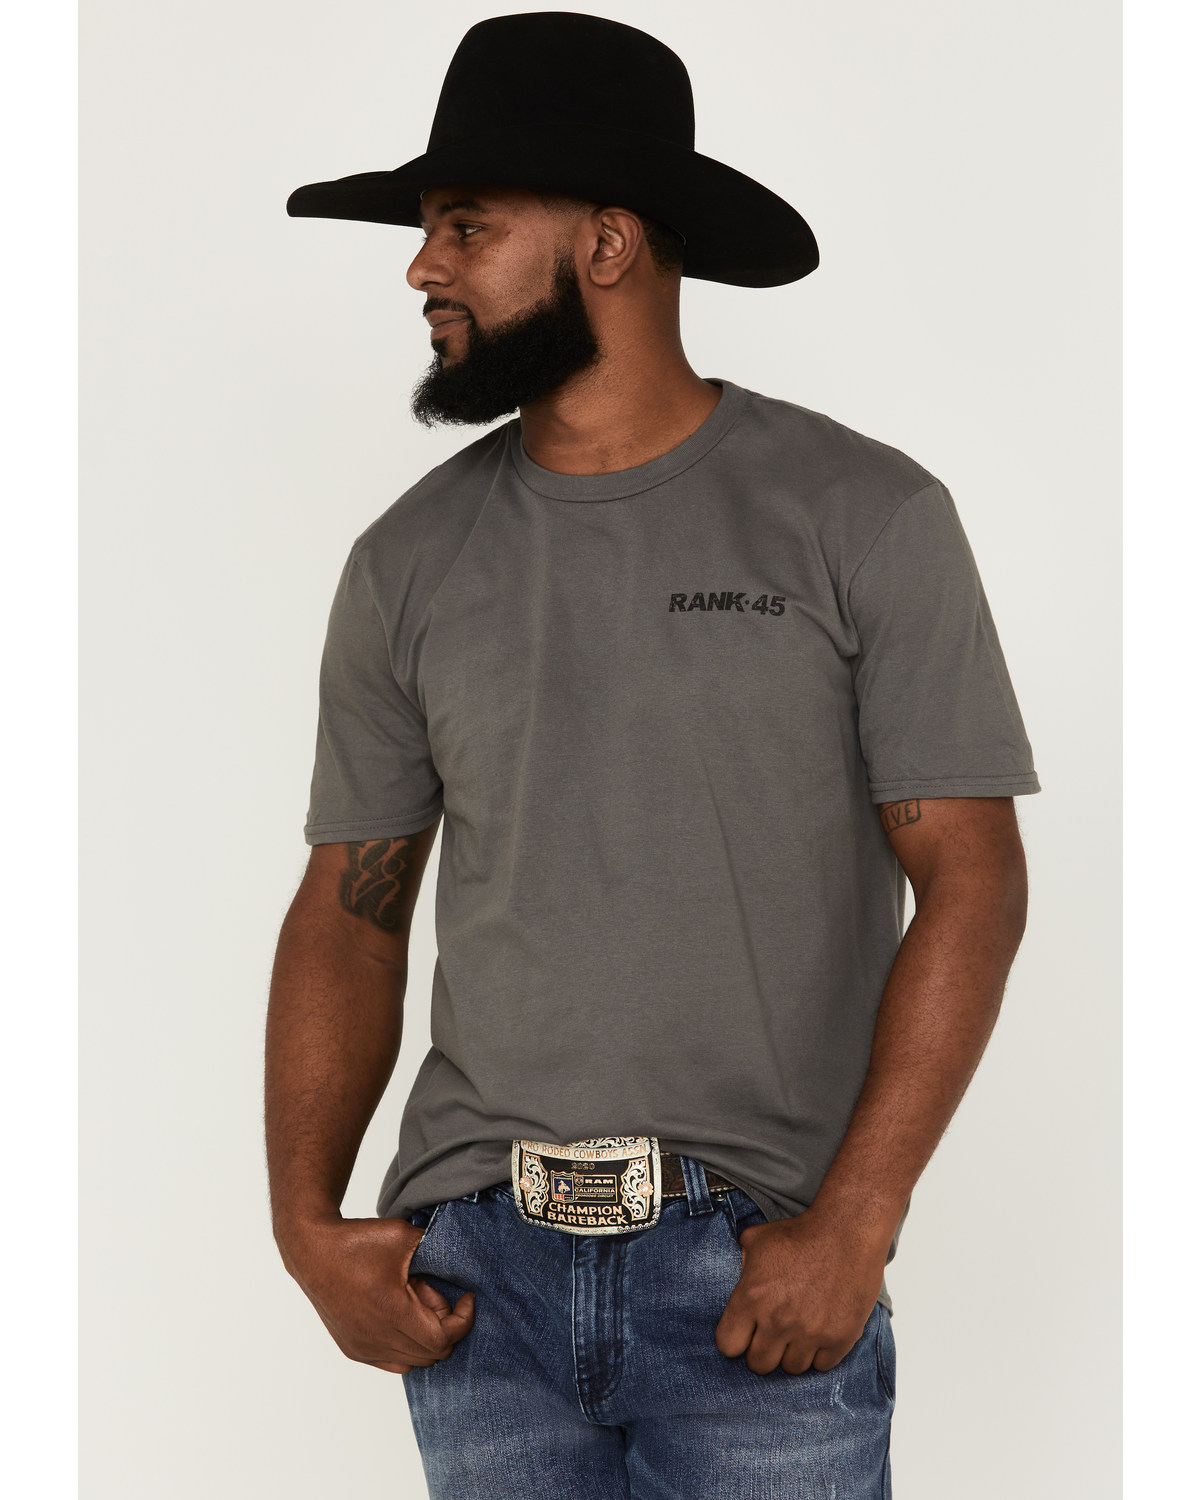 RANK 45® Men's Southwestern Rider Short Sleeve Graphic T-Shirt